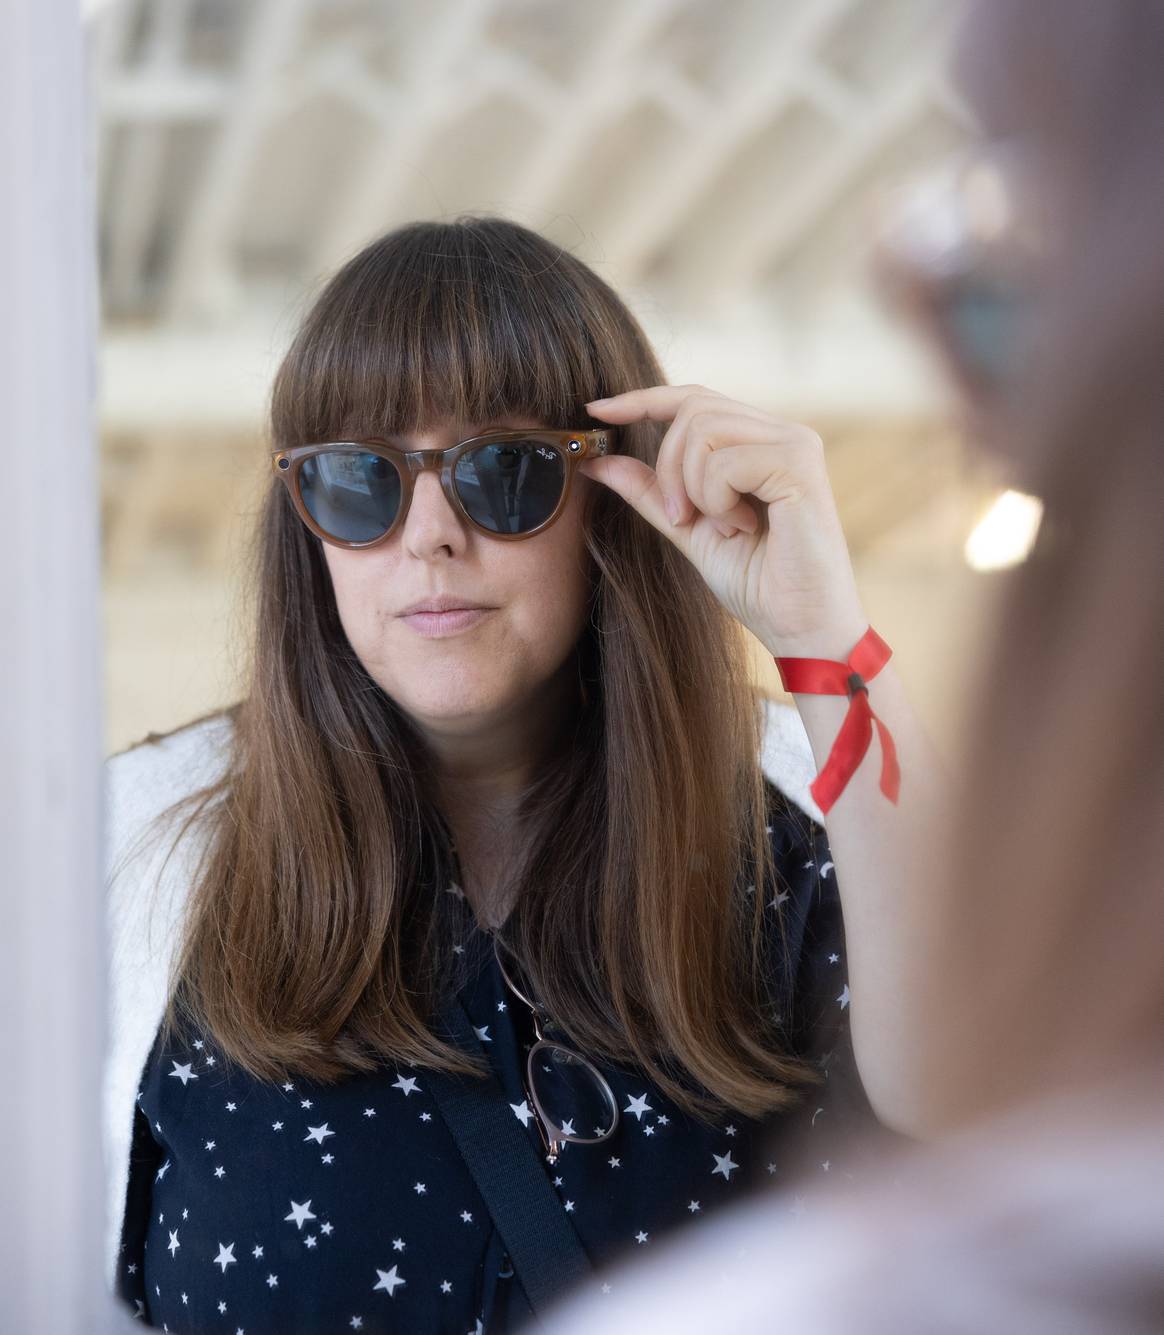 FashionUnited editor Danielle Wightman-Stone trying on the Ray-Ban Meta smart glasses